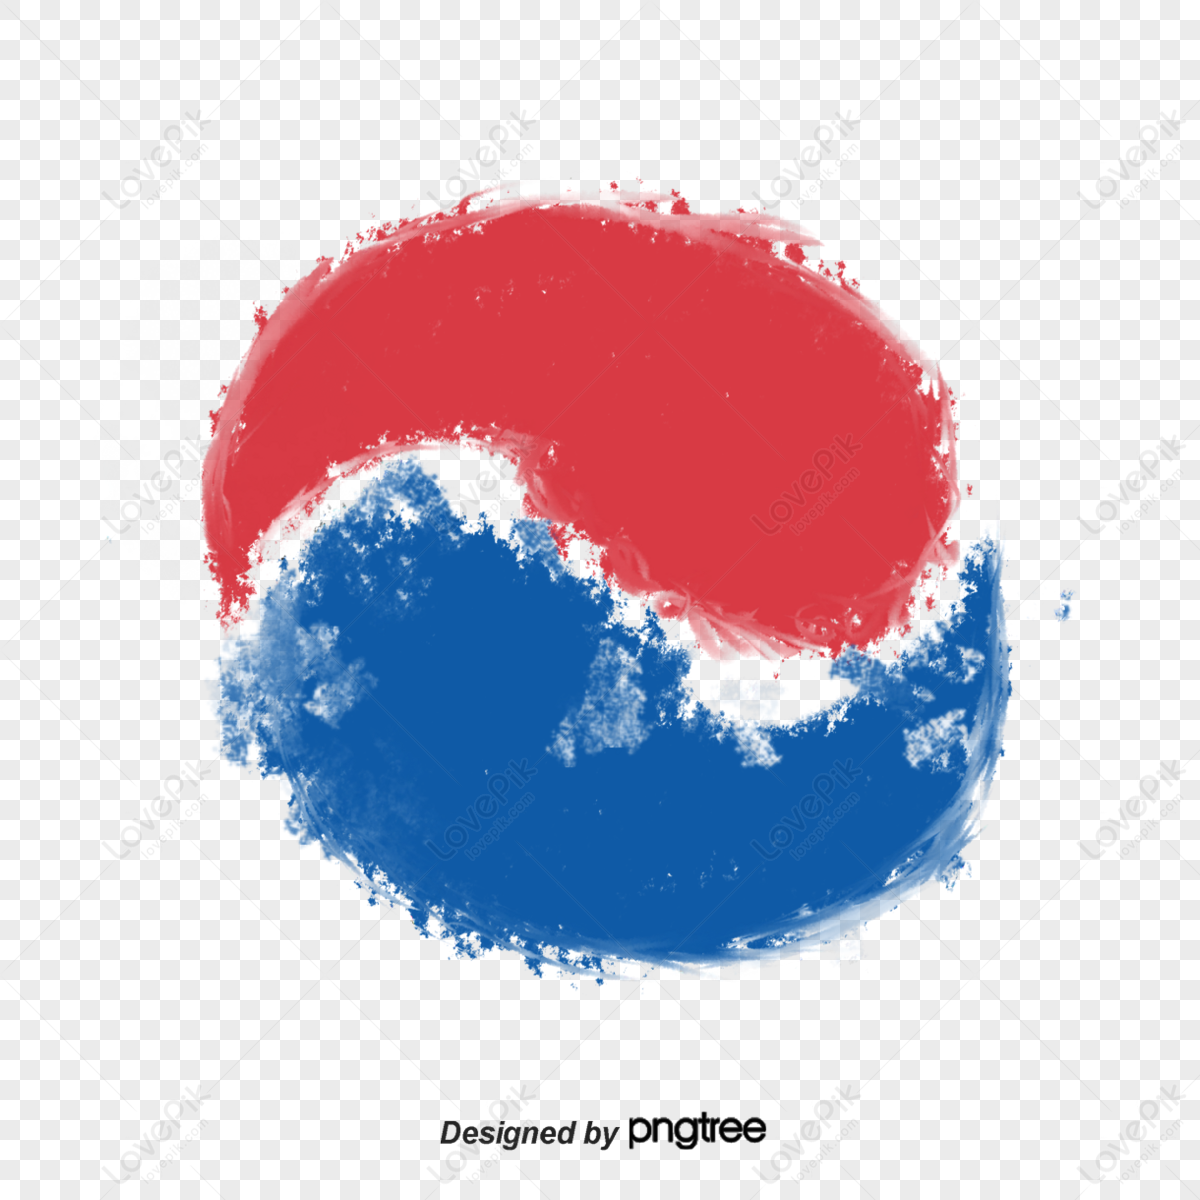 ink blooming elements in taiji banner of korea,brush stroke,symbol png image free download